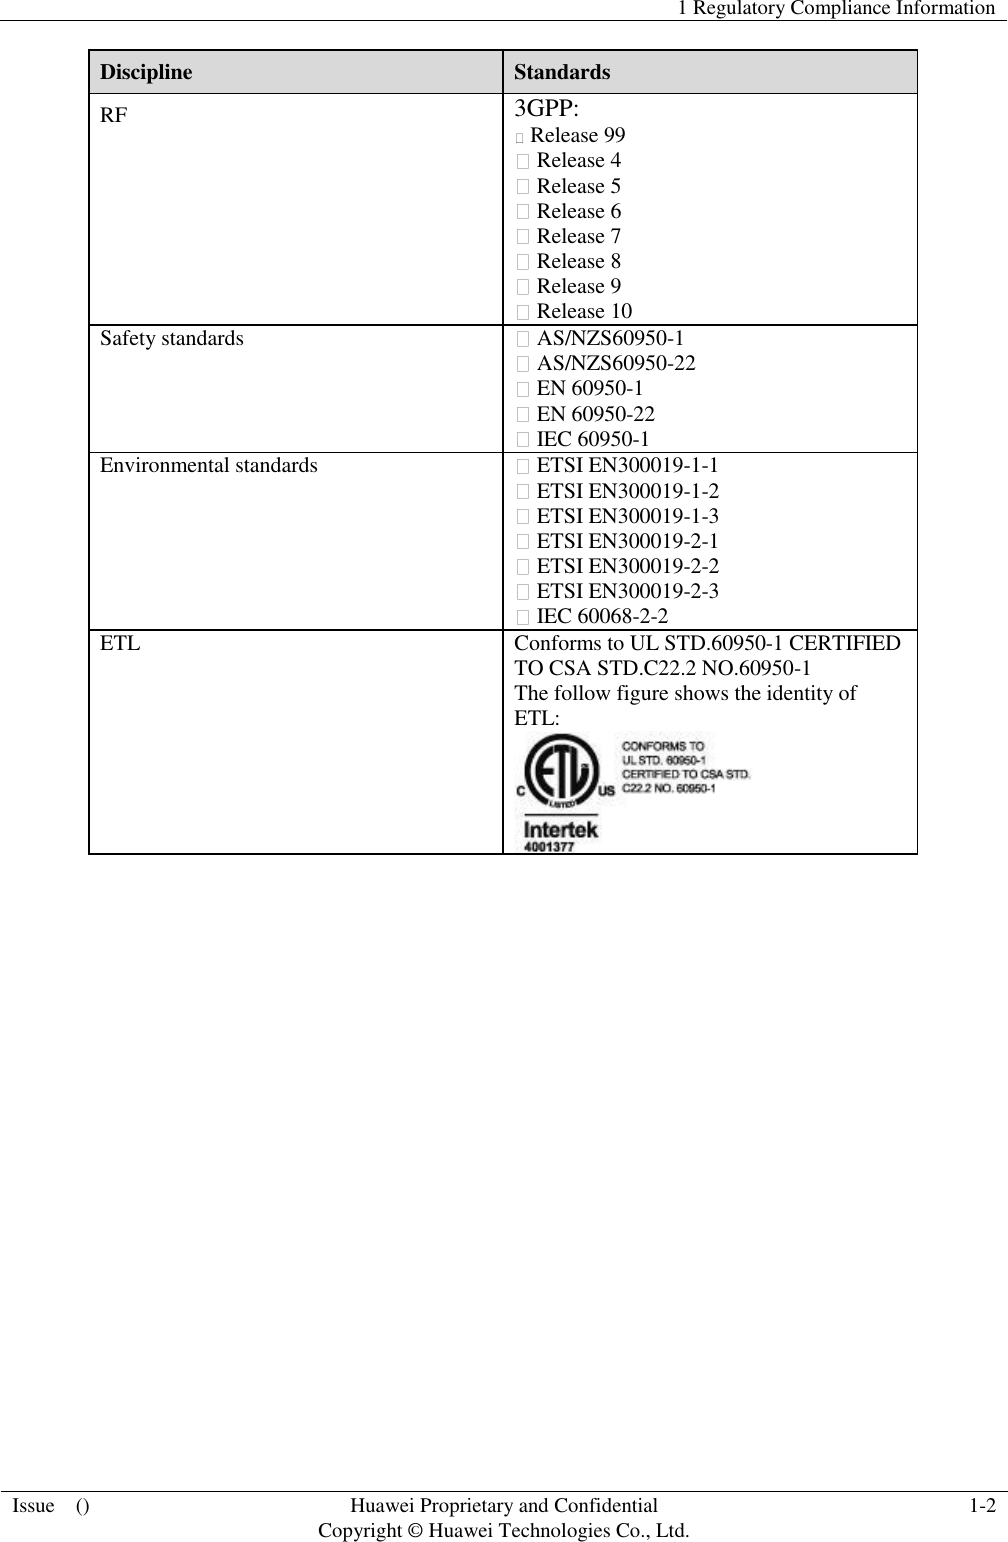   1 Regulatory Compliance Information  Issue    () Huawei Proprietary and Confidential                                     Copyright © Huawei Technologies Co., Ltd. 1-2  Discipline Standards RF 3GPP:  Release 99    Release 4    Release 5    Release 6    Release 7    Release 8    Release 9    Release 10 Safety standards     AS/NZS60950-1    AS/NZS60950-22    EN 60950-1    EN 60950-22    IEC 60950-1   Environmental standards     ETSI EN300019-1-1    ETSI EN300019-1-2    ETSI EN300019-1-3    ETSI EN300019-2-1    ETSI EN300019-2-2    ETSI EN300019-2-3    IEC 60068-2-2   ETL Conforms to UL STD.60950-1 CERTIFIED TO CSA STD.C22.2 NO.60950-1   The follow figure shows the identity of ETL:    